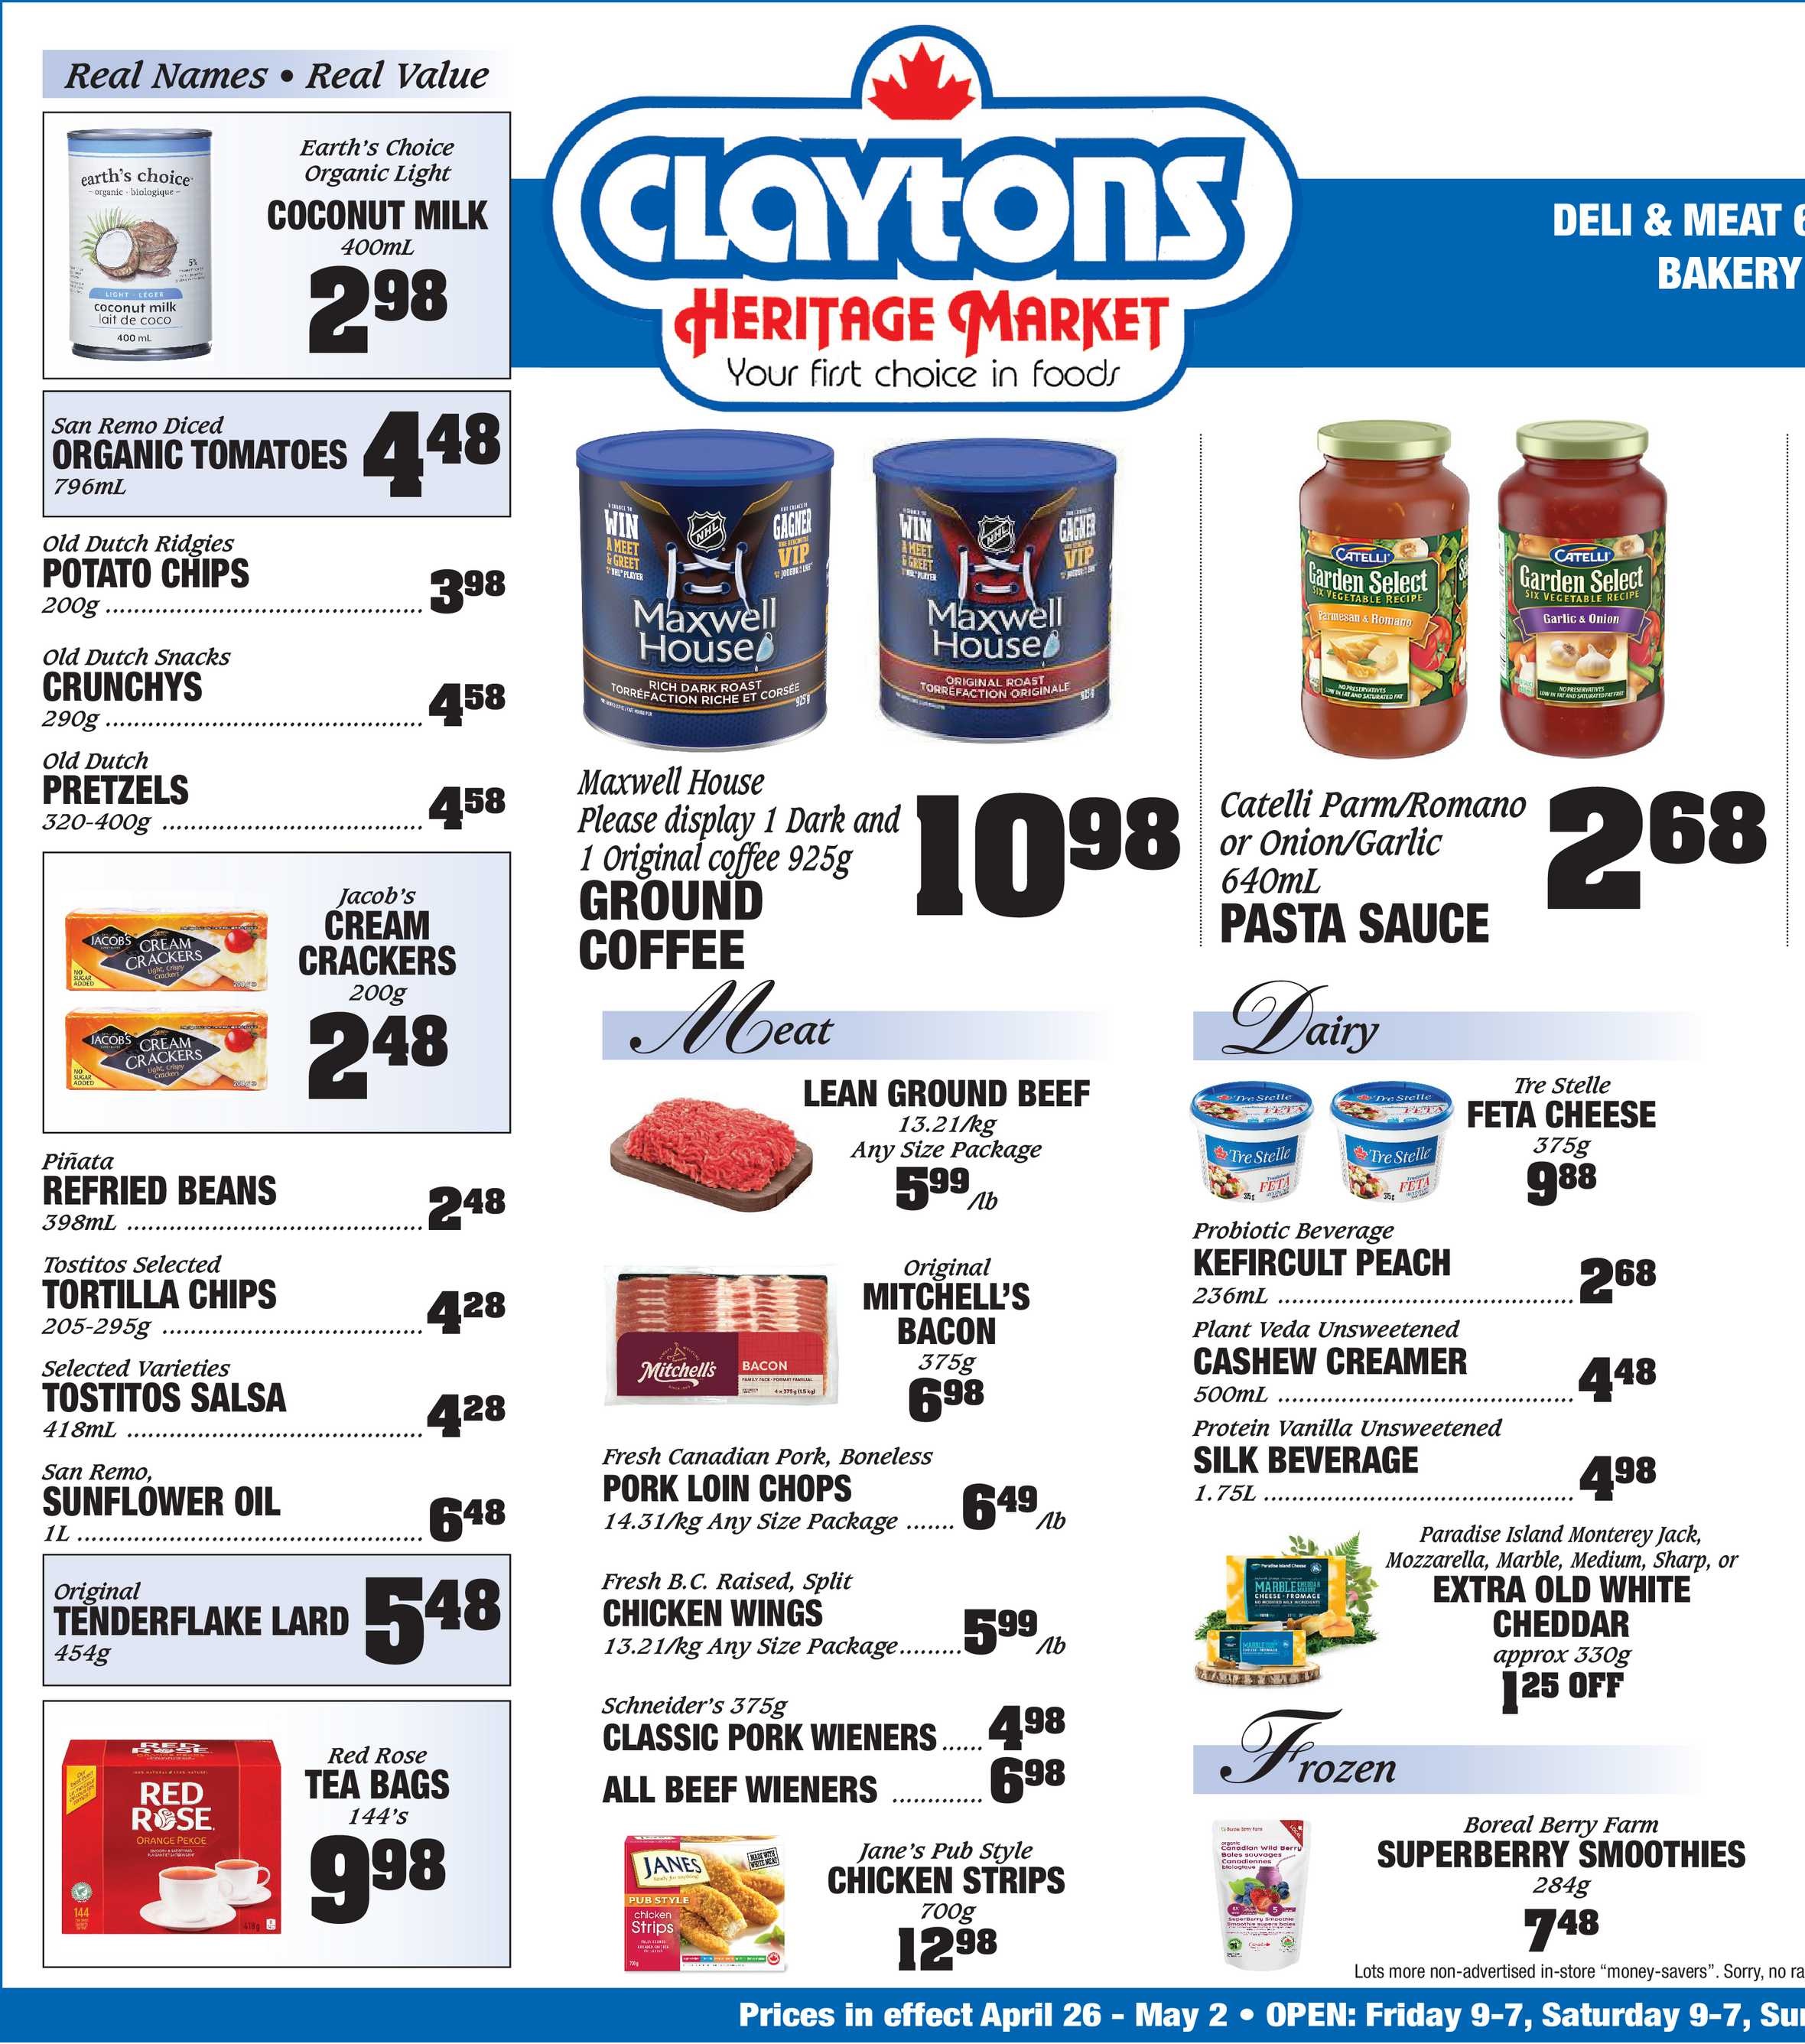 Claytons Heritage Market - Weekly Flyer Specials